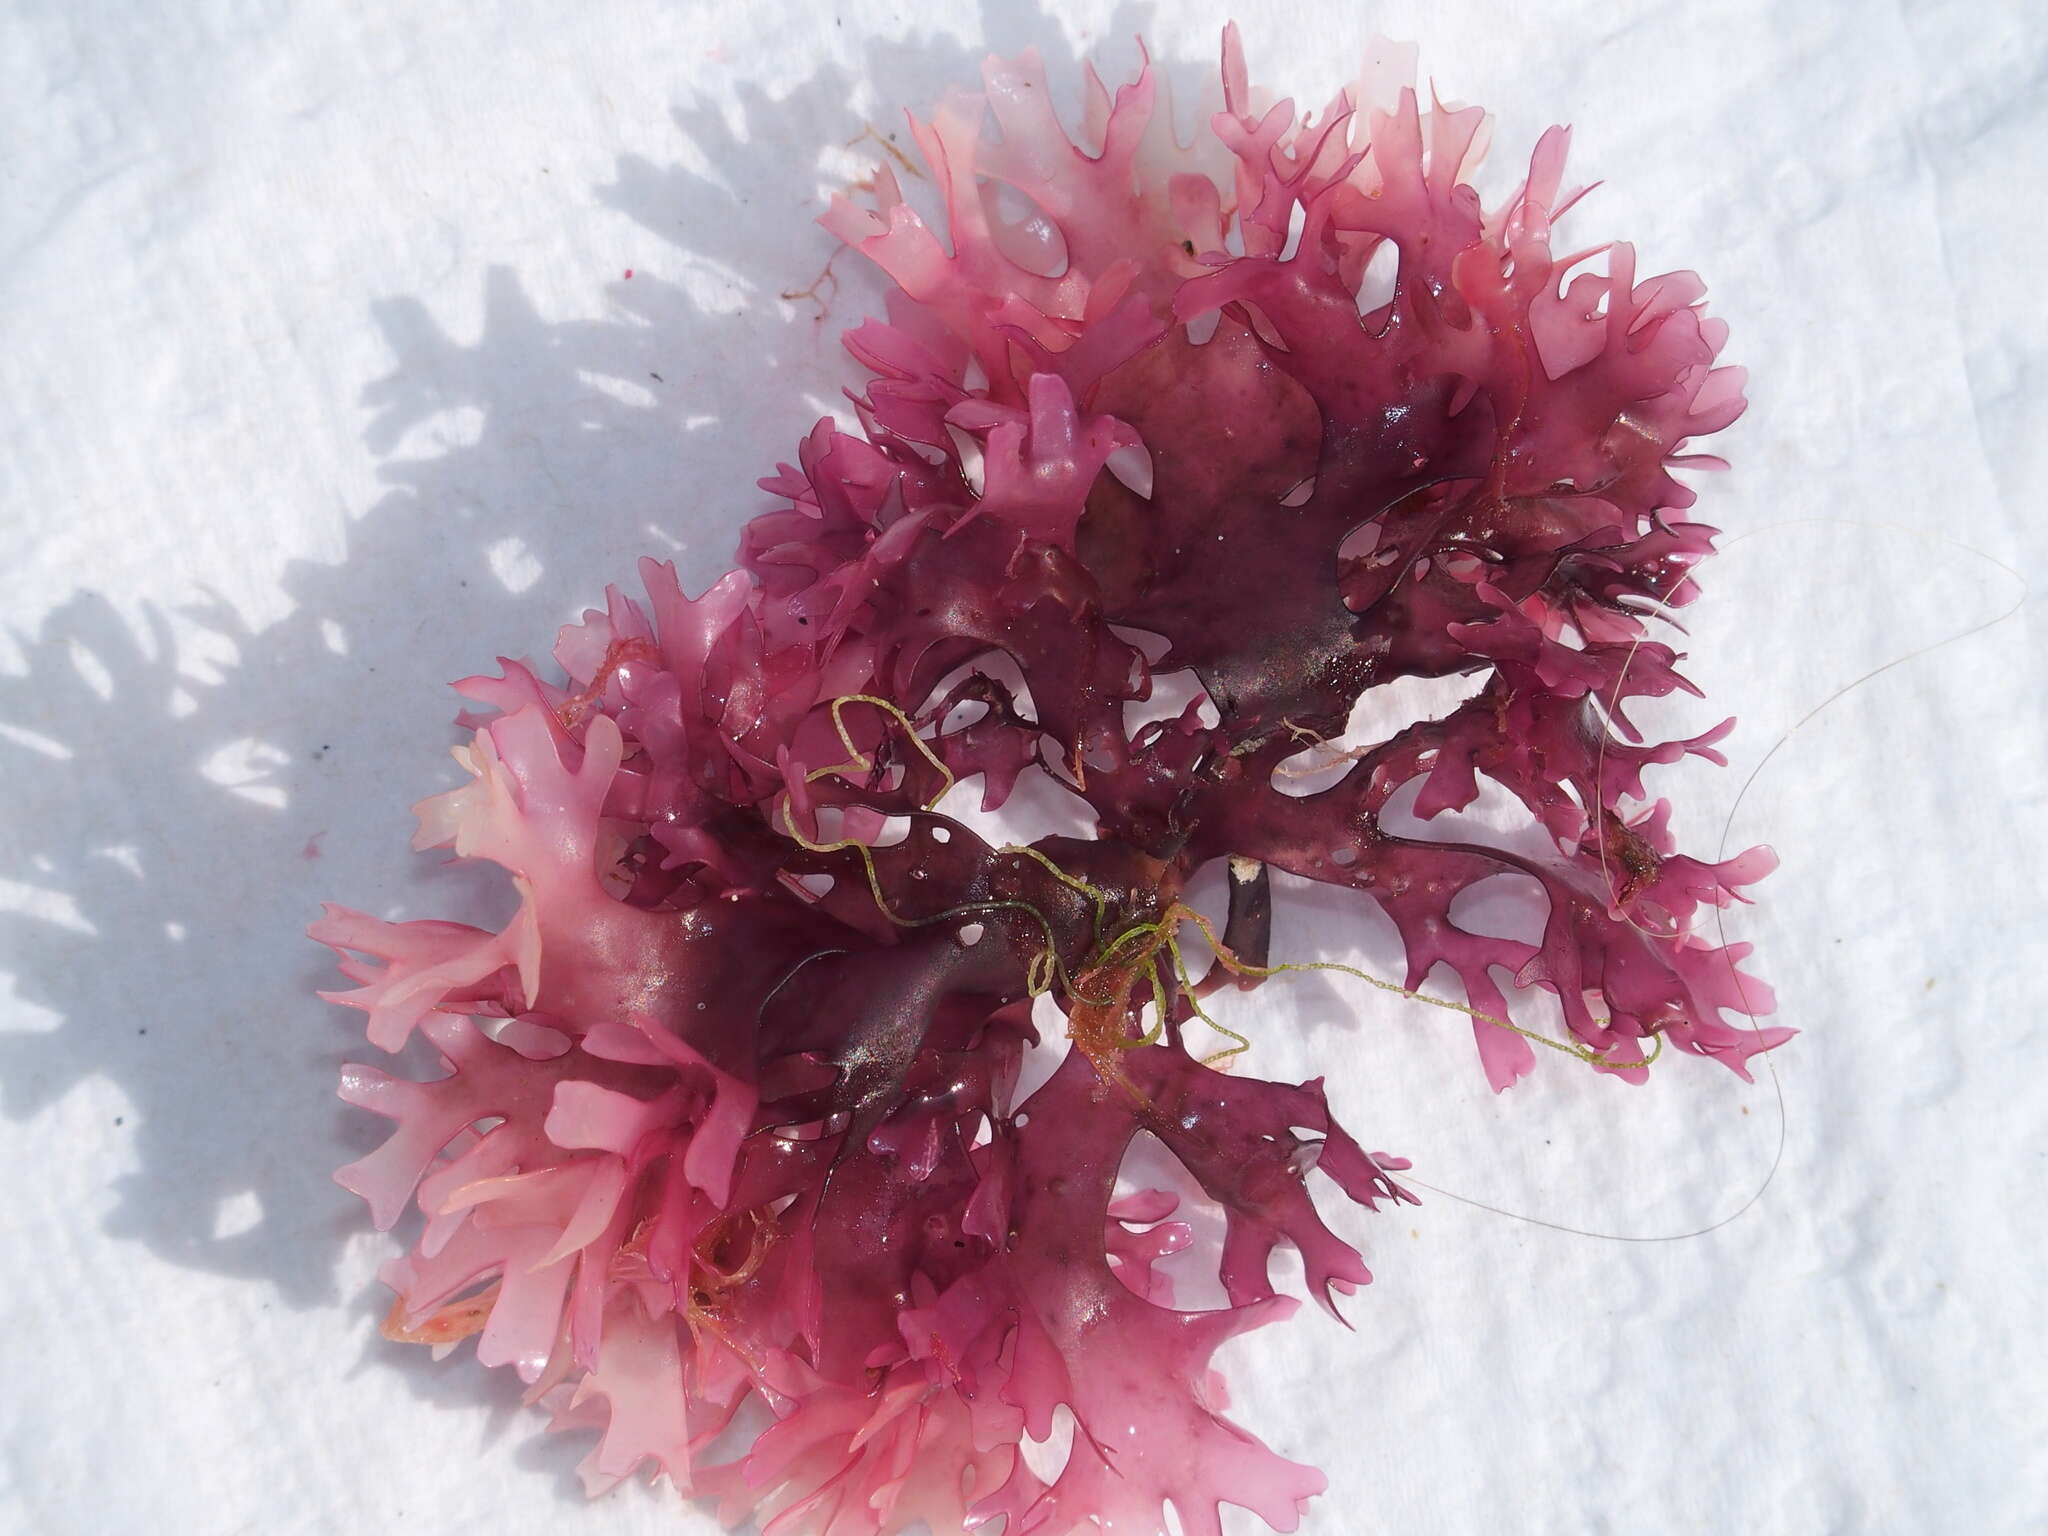 Image of Red alga